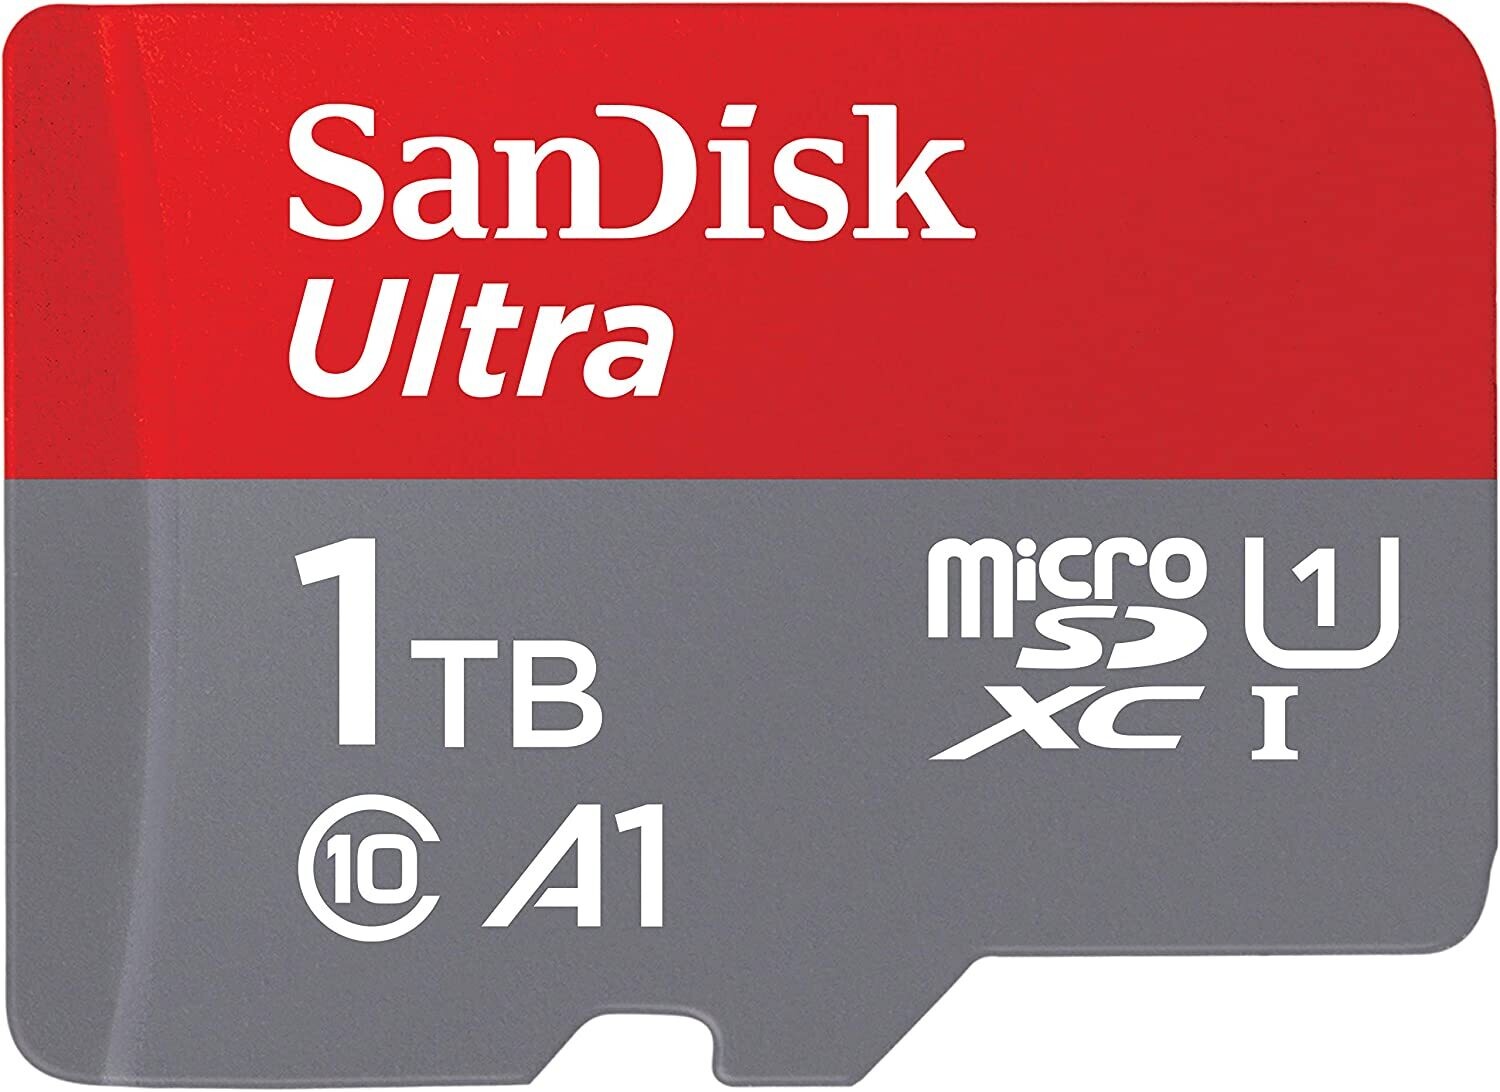 SanDisk Ultra 1TB MicroSD Card Memory Card, 120MB/s